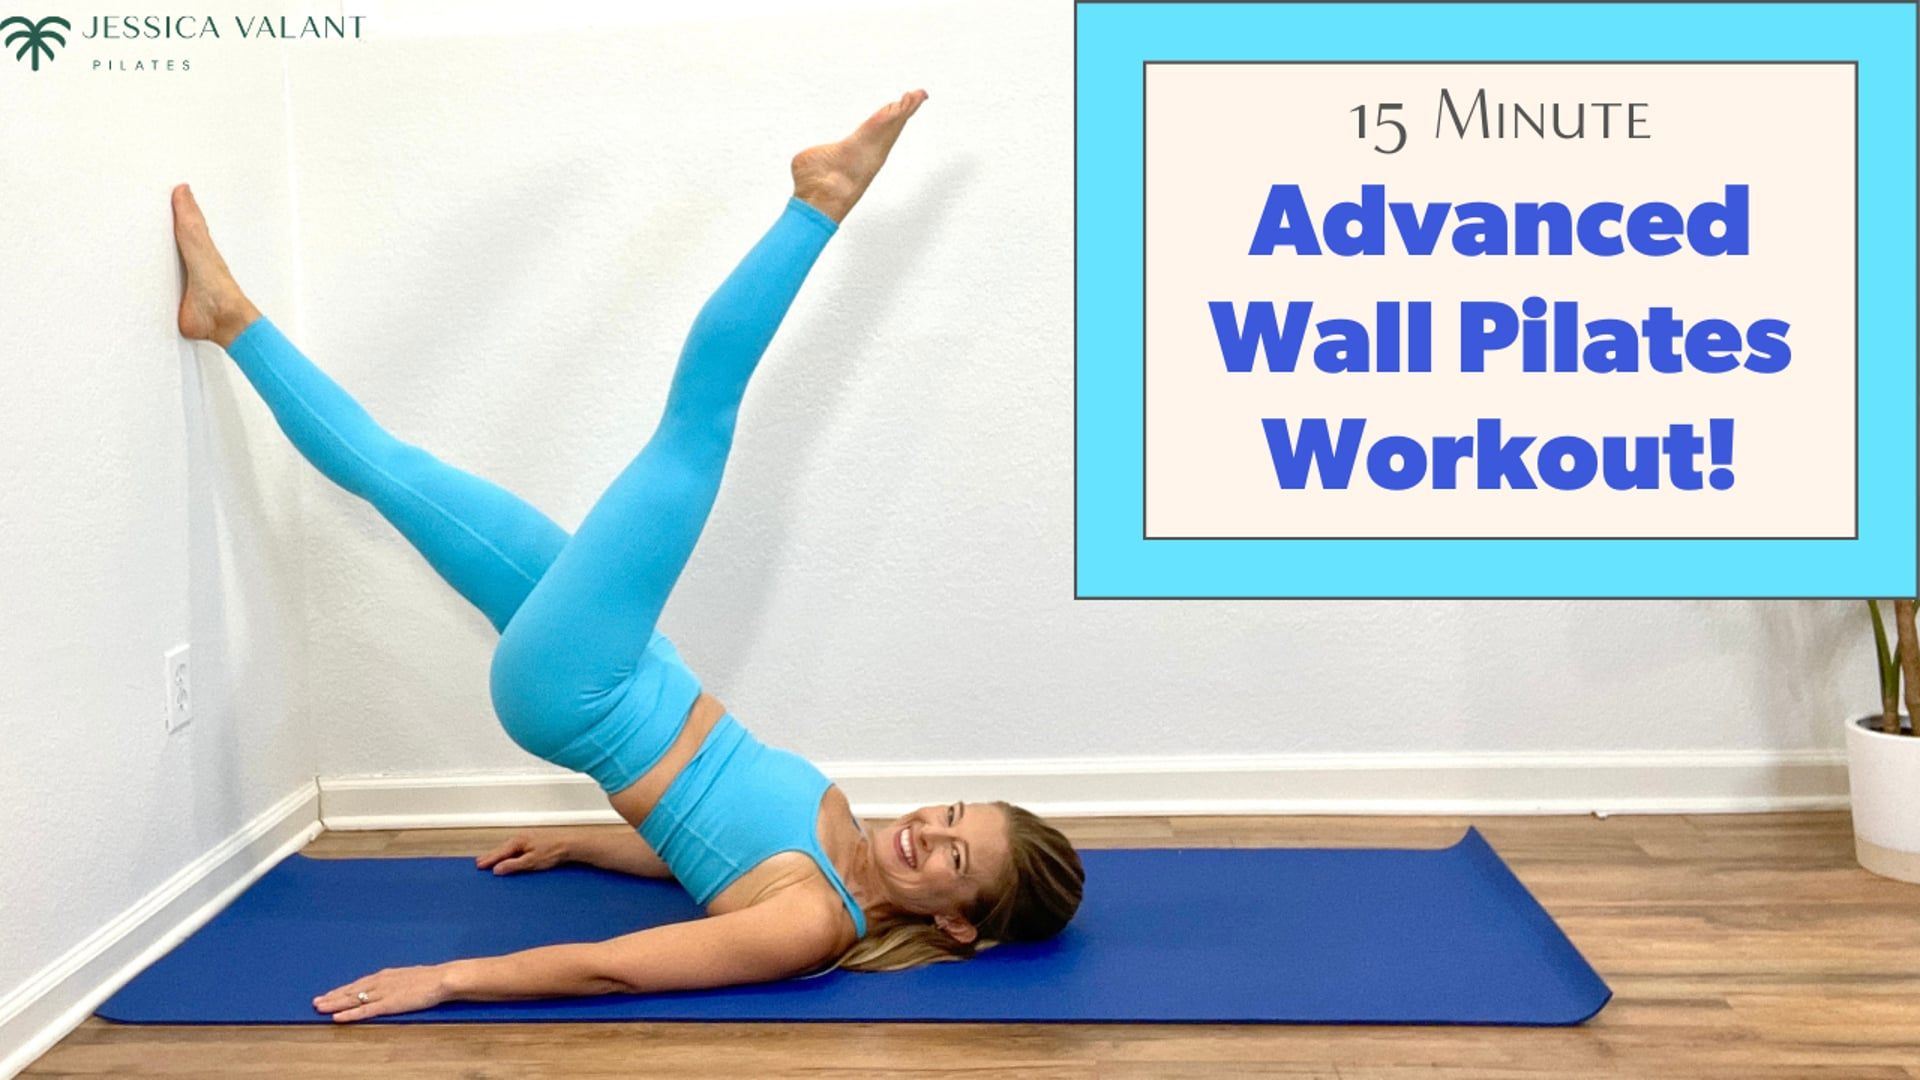 Advanced Wall Pilates Workouts - Jessica Valant Pilates